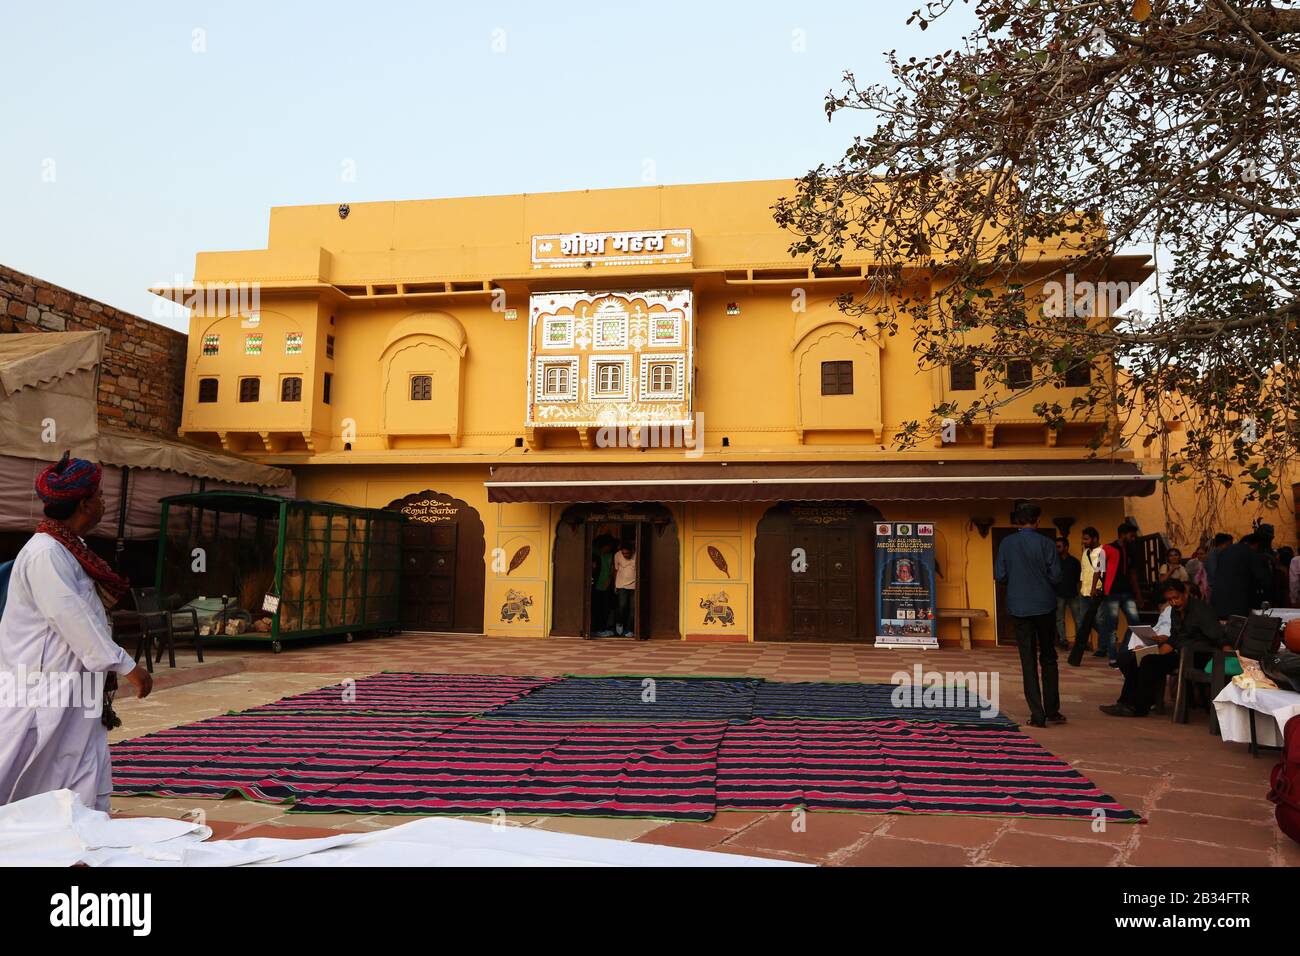 Jaipur Wax Museum et Sheesh Mahal, Jaipur, Rajasthan, Inde Banque D'Images